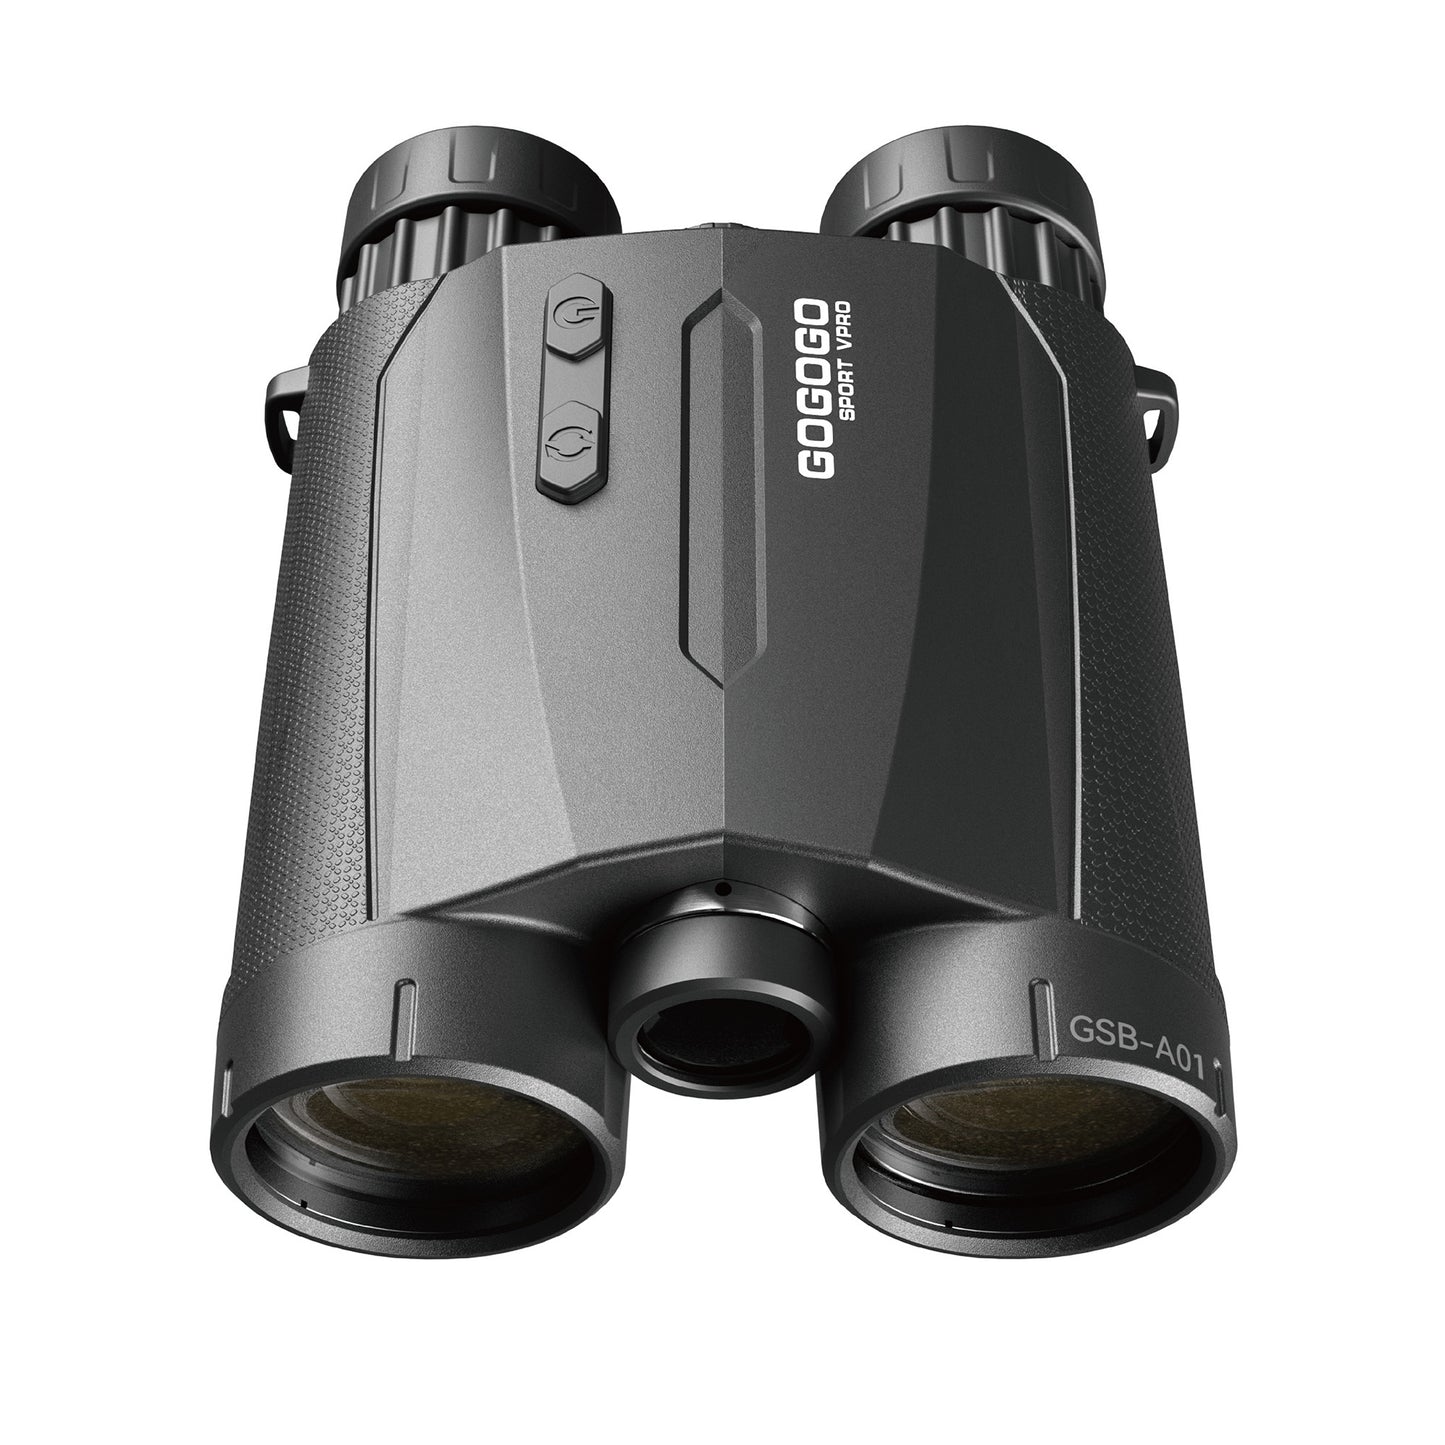 Gogogo Sport Vpro Wildlife Ulra-Clear View 1500/2500 Yard Laser Rangefinder Binocular for Archery/Bow Hunting/Shooting/Birdviewing, 8x42 (1500 Yard)